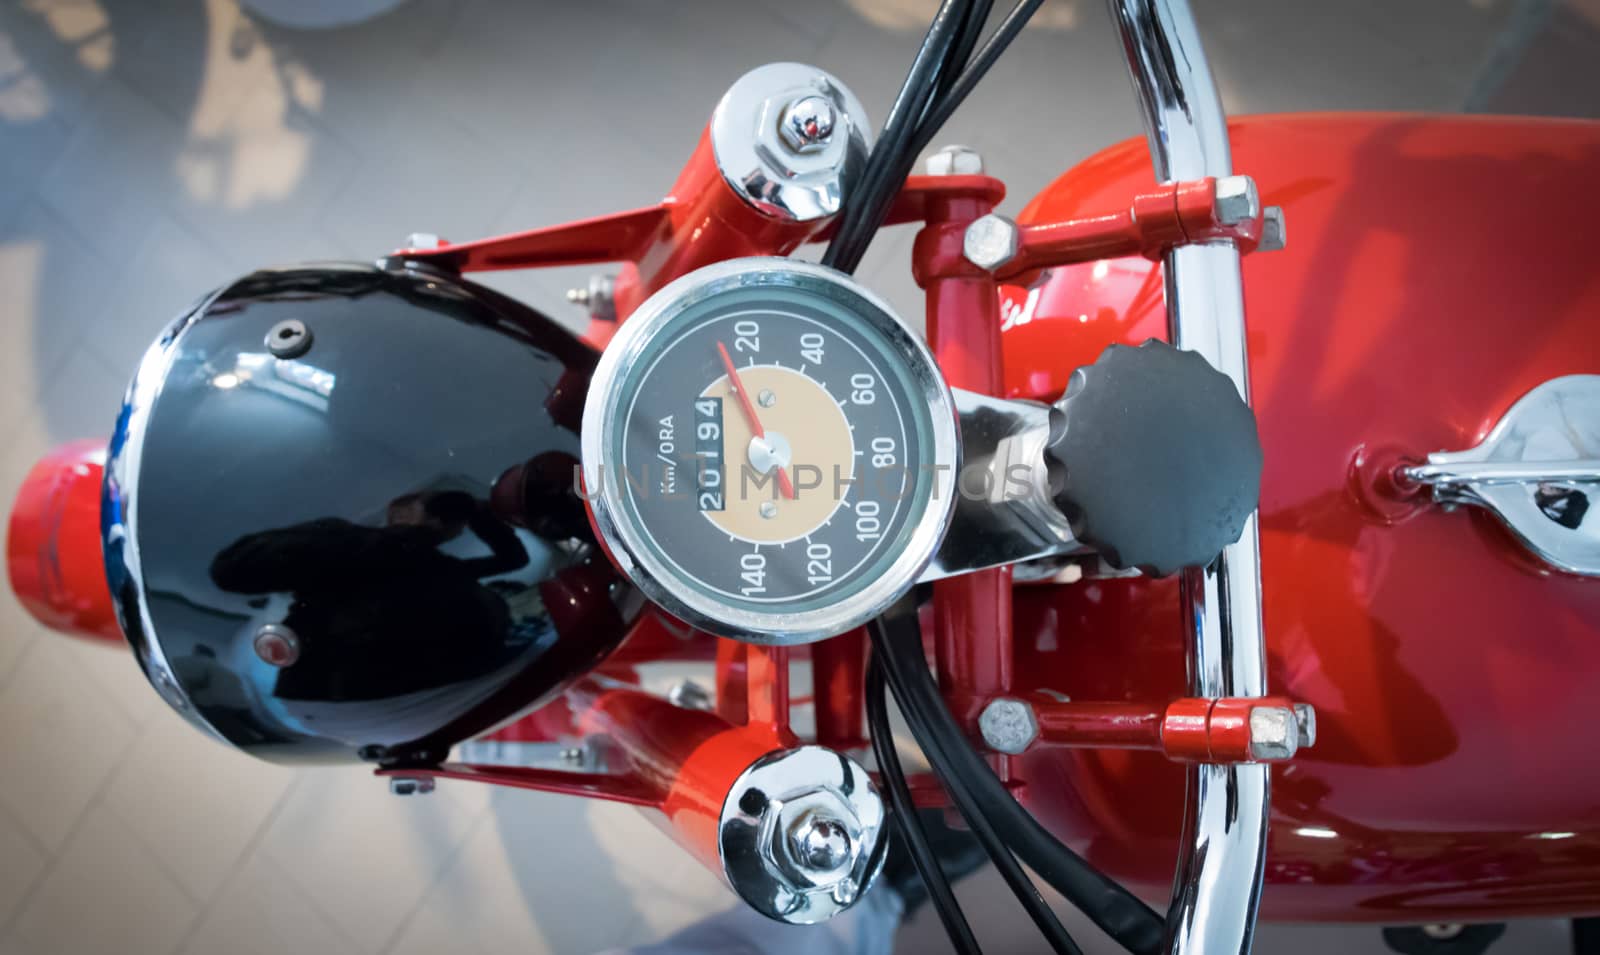 speedometer of a vintage red motorcycle